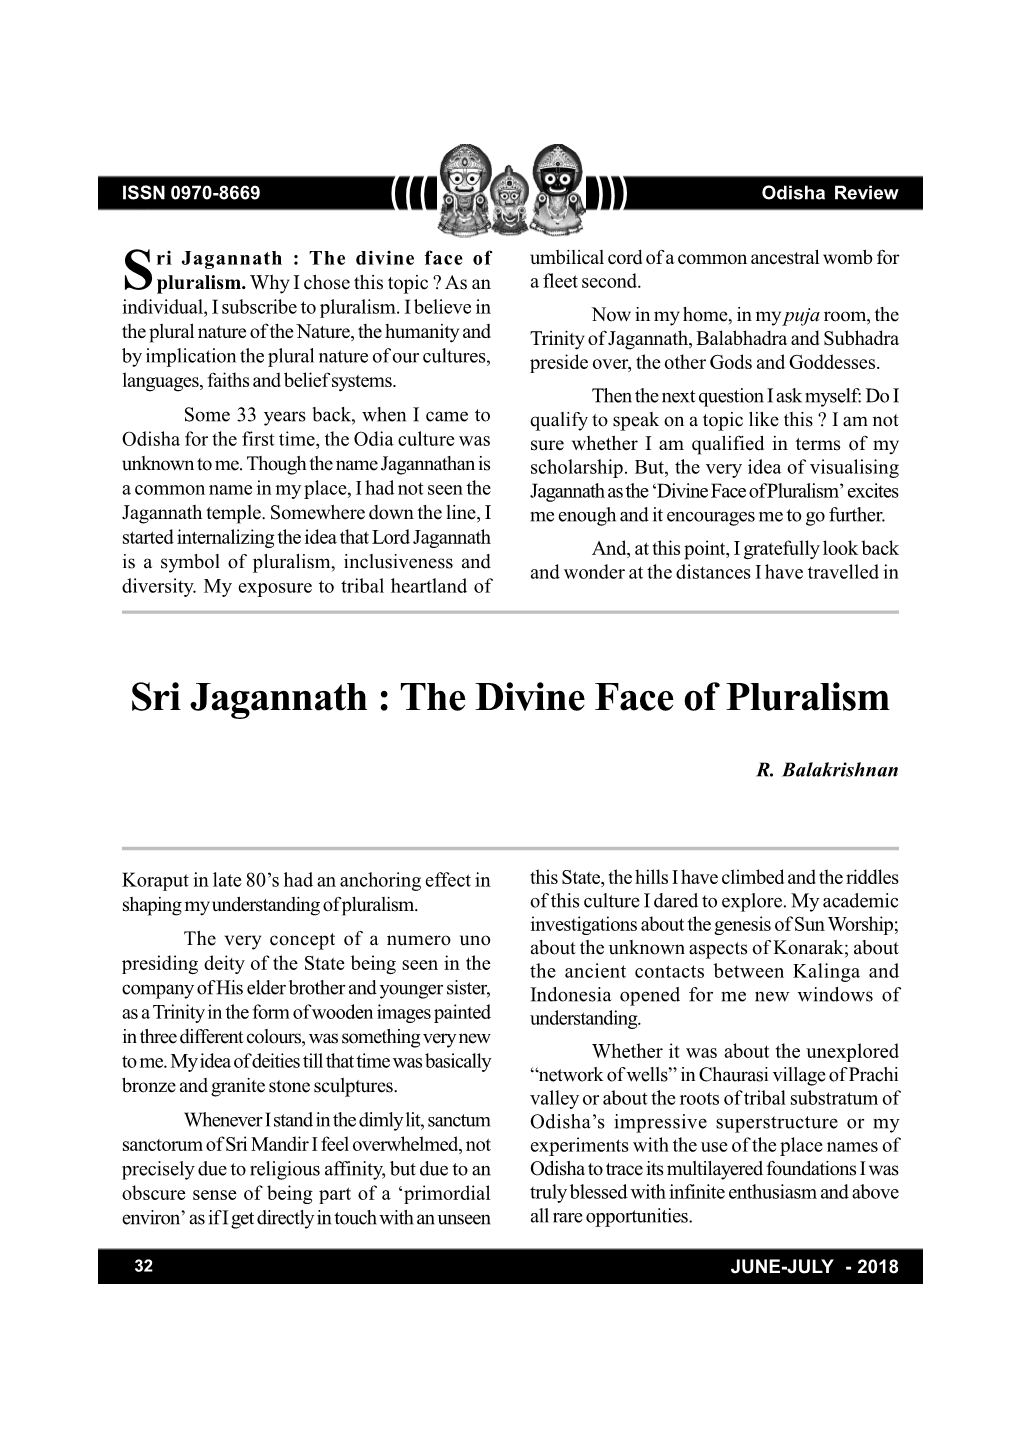 Sri Jagannath : the Divine Face of Pluralism